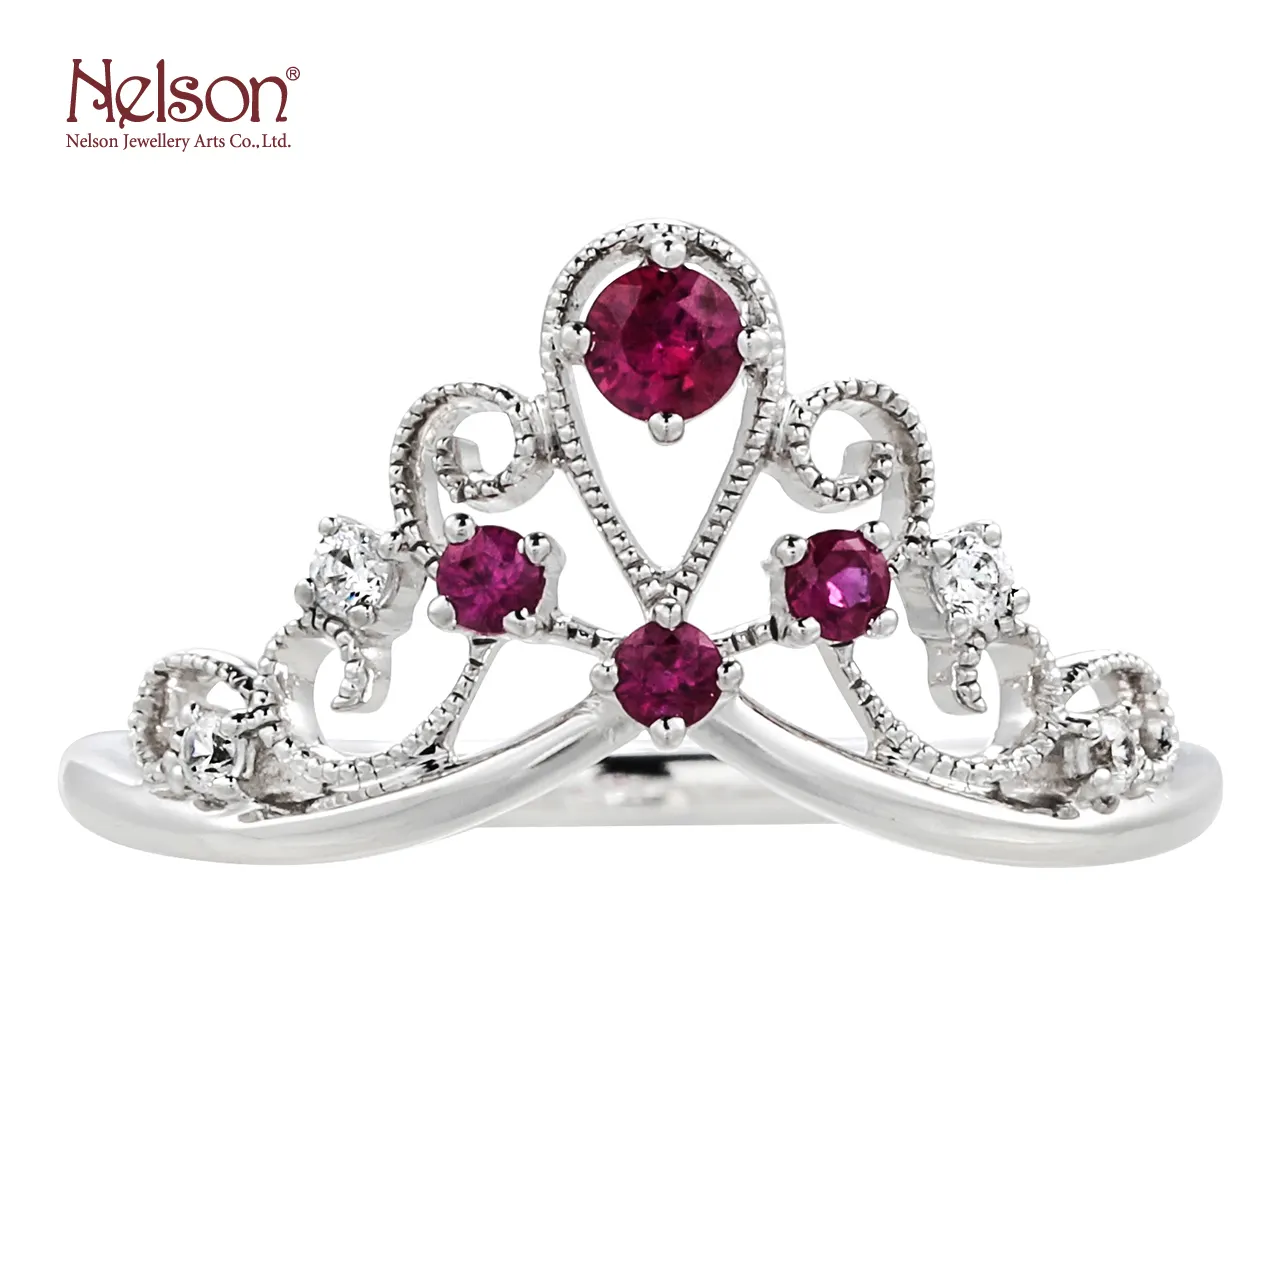 Award Winning Factory Wholesale price no MOQ OEM ODM Zero risk 18K White Gold Diamond Ruby Crown Theme rings For Girlfriends